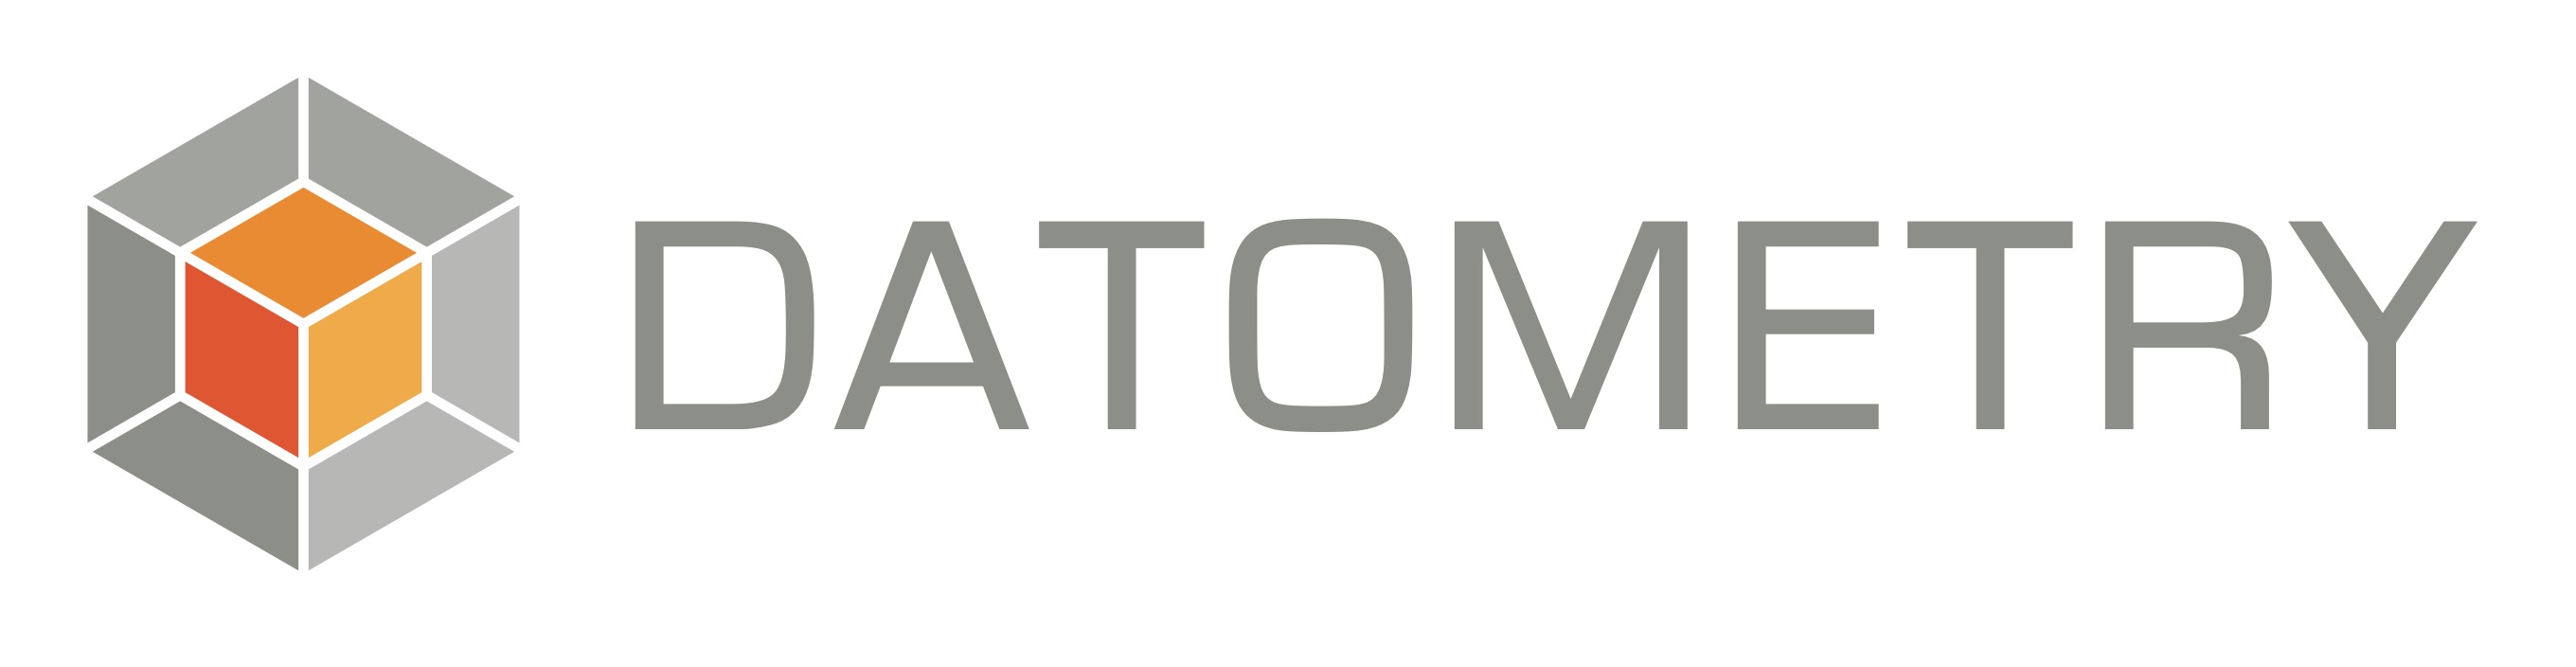 Datometry Logo